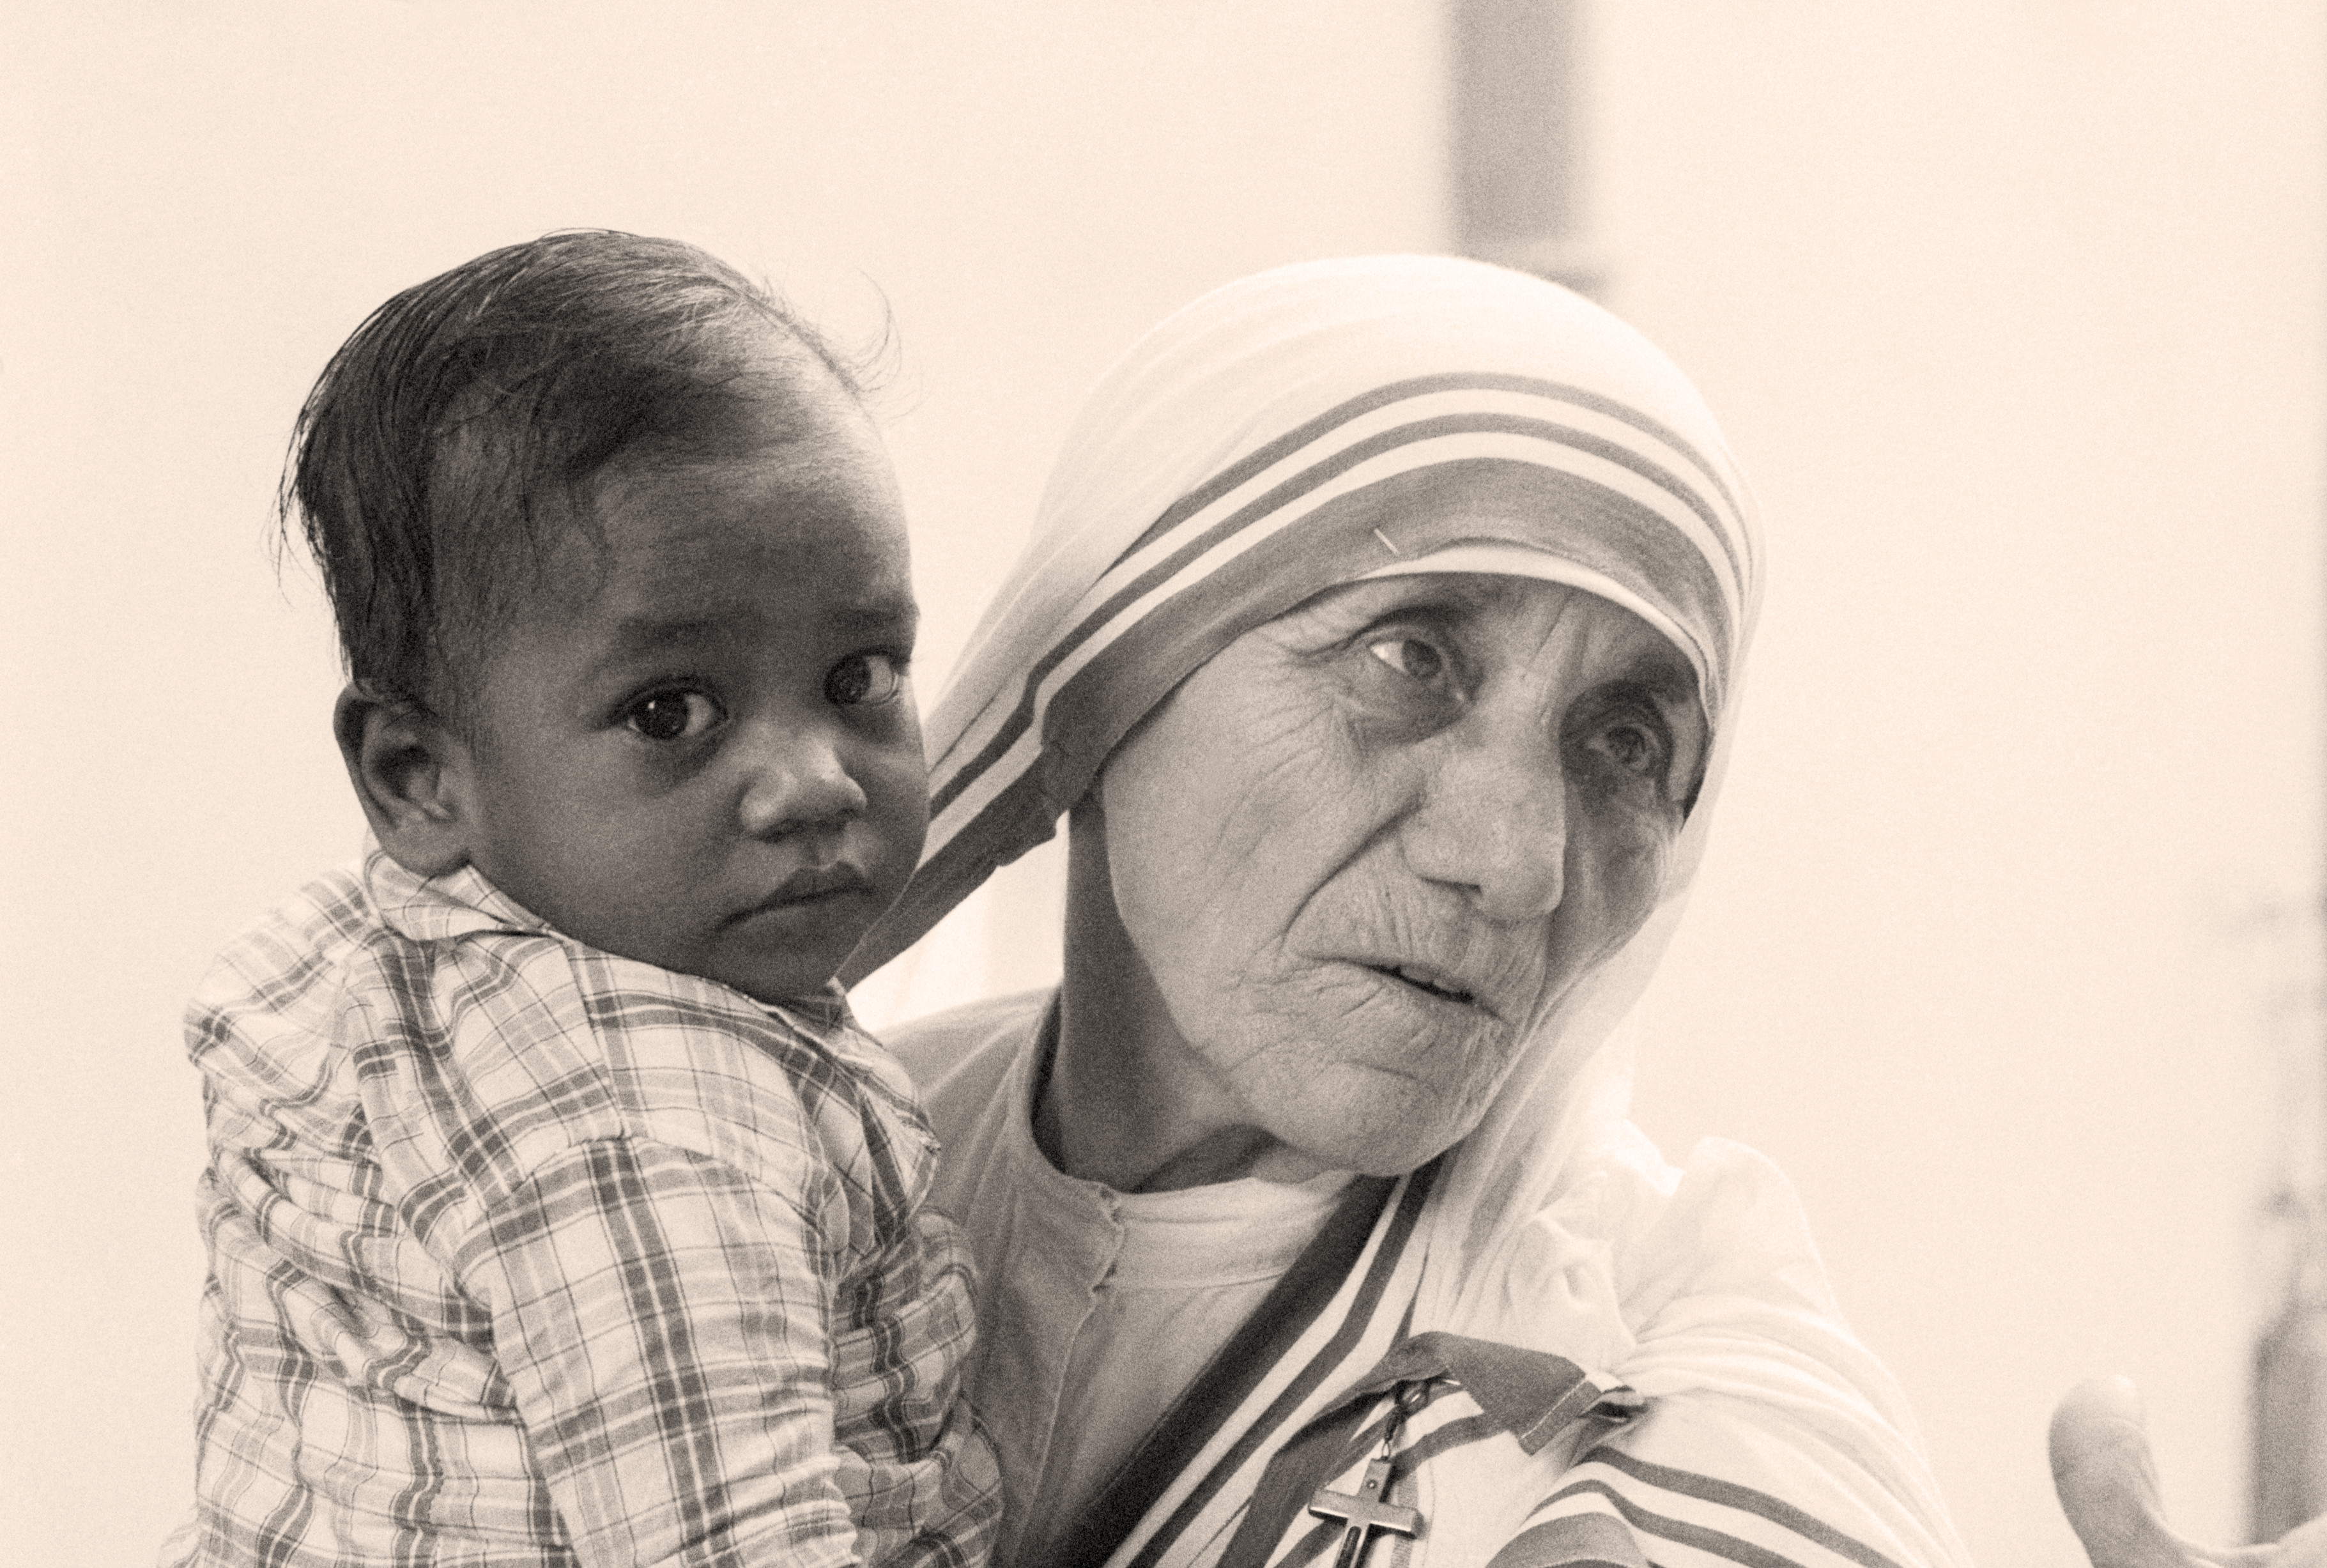 Mother Teresa.